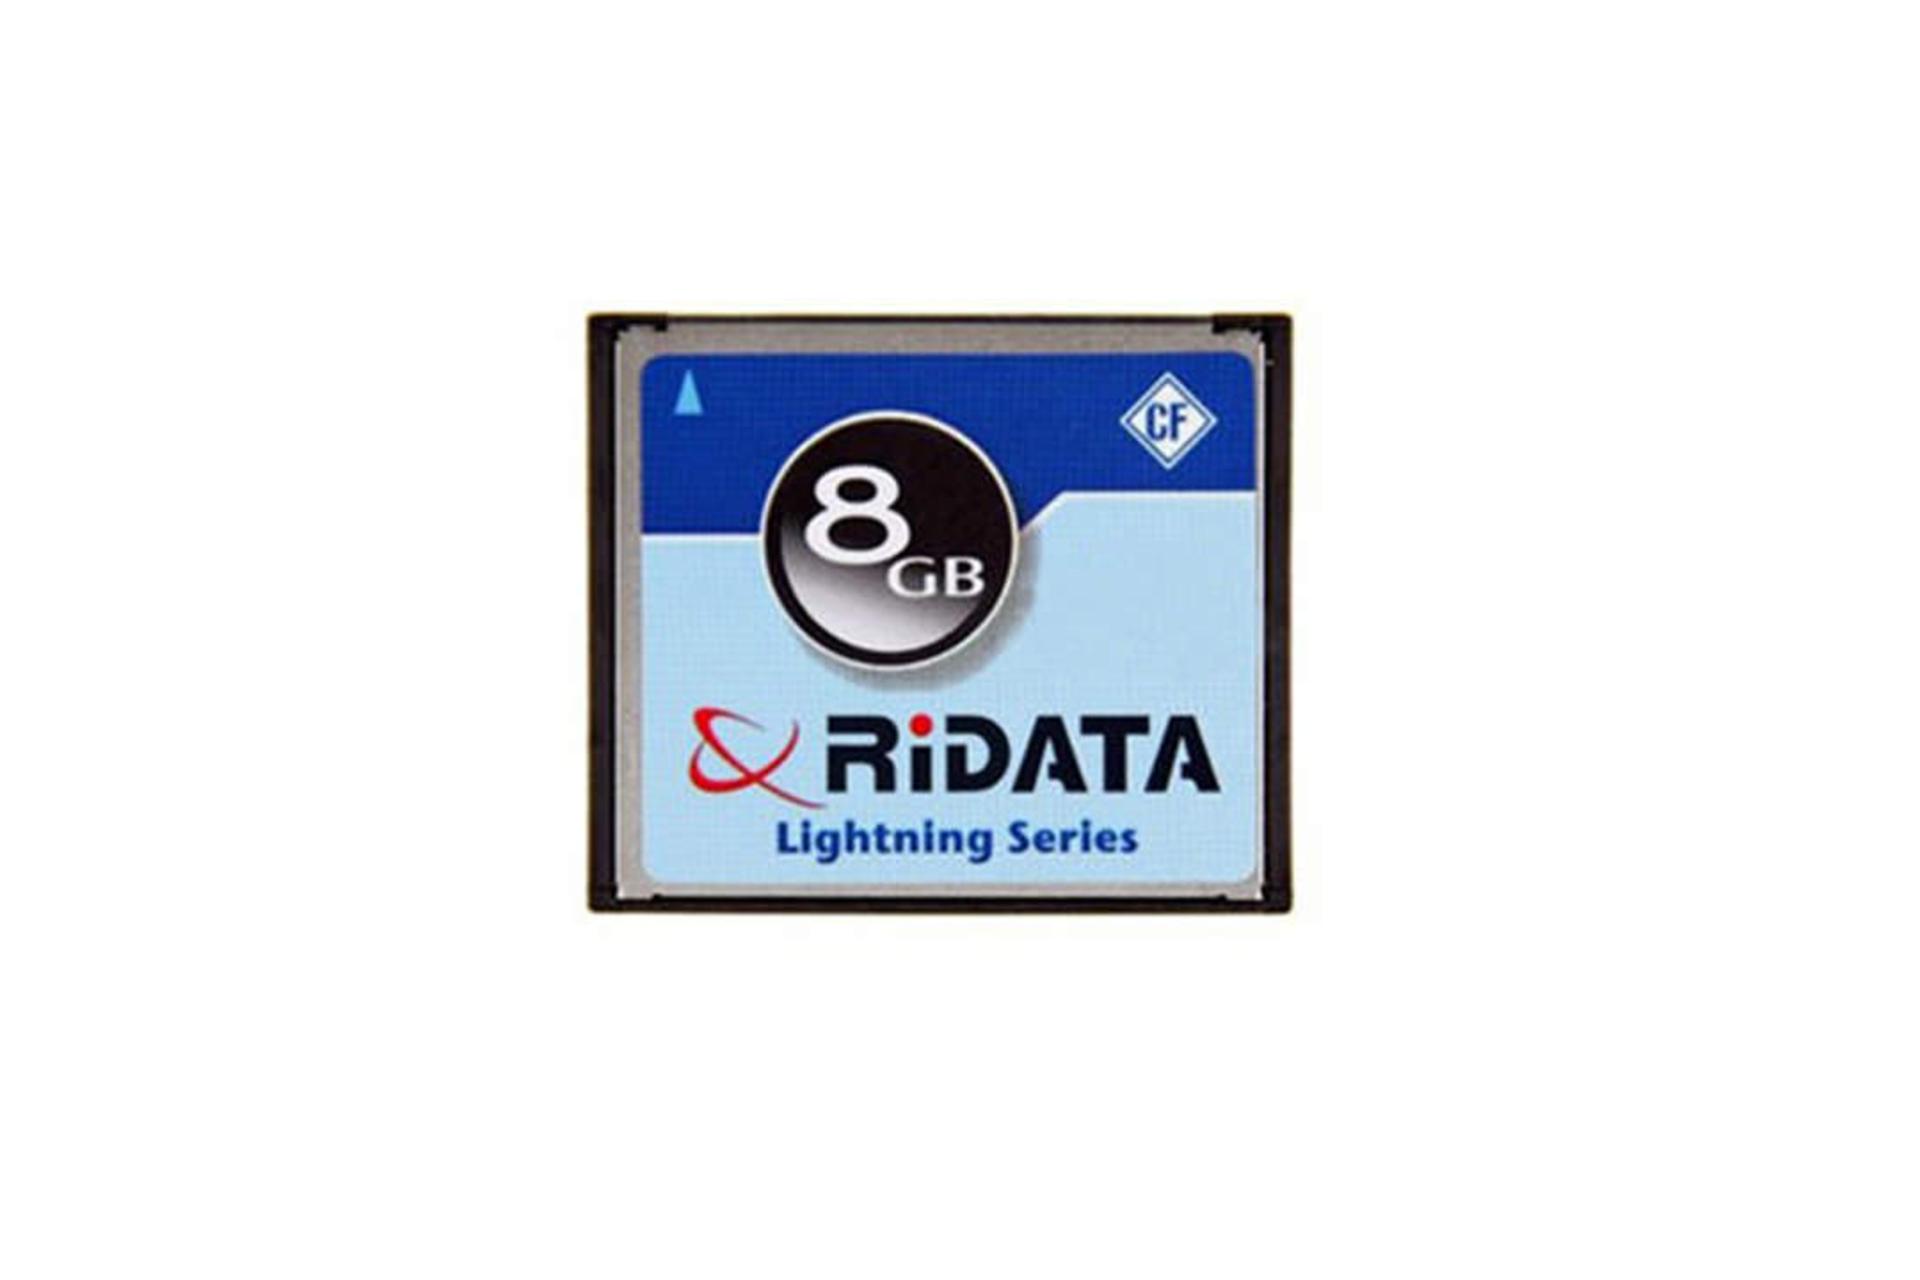 RiDATA Lightning Series CF 8GB